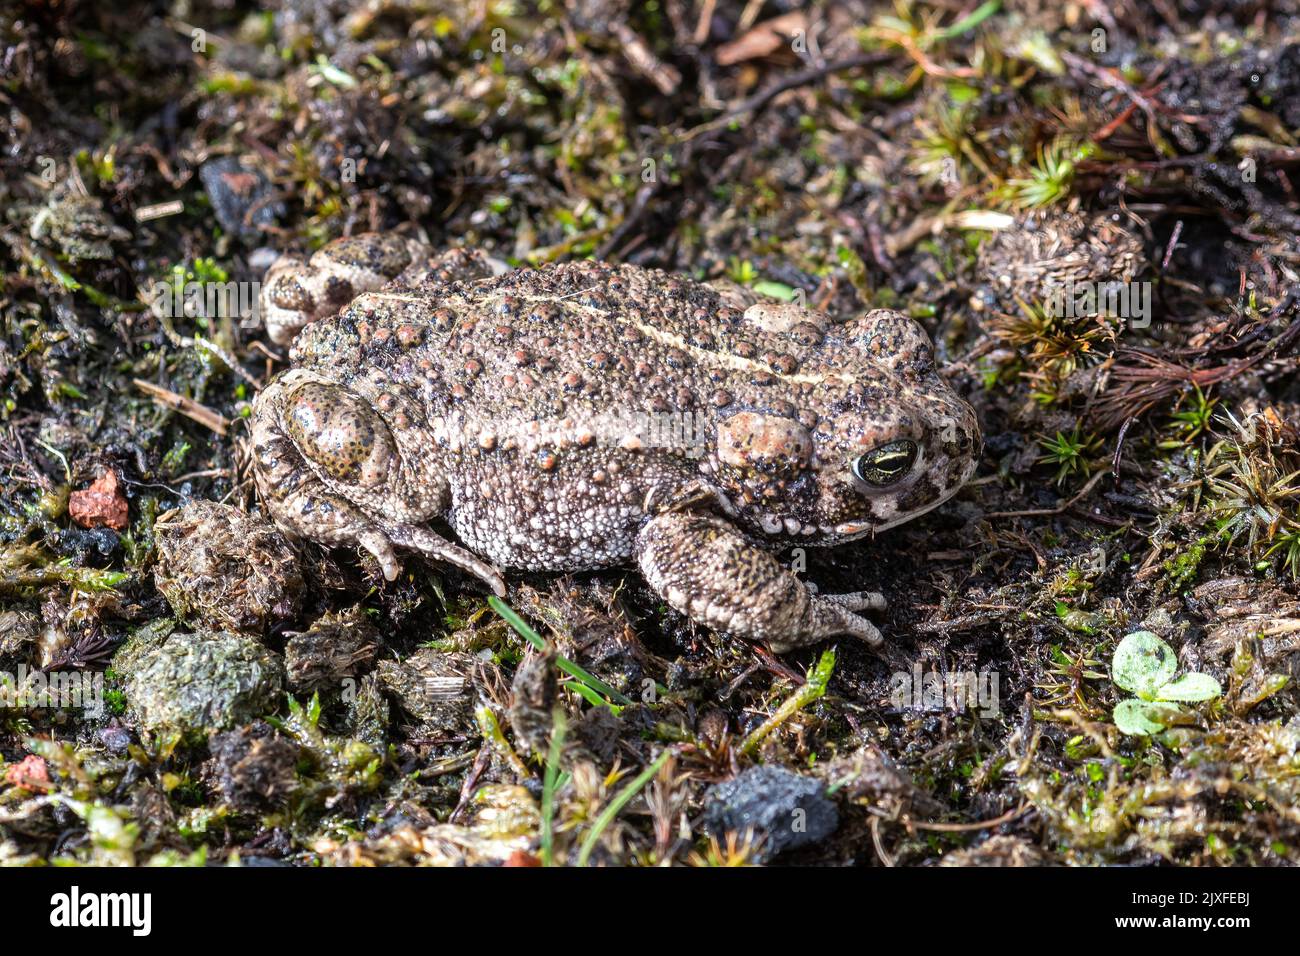 Natterjack toad (Epidalea calamita), a rare UK amphibian species in natural terrestrial habitat, Hampshire, England, UK Stock Photo